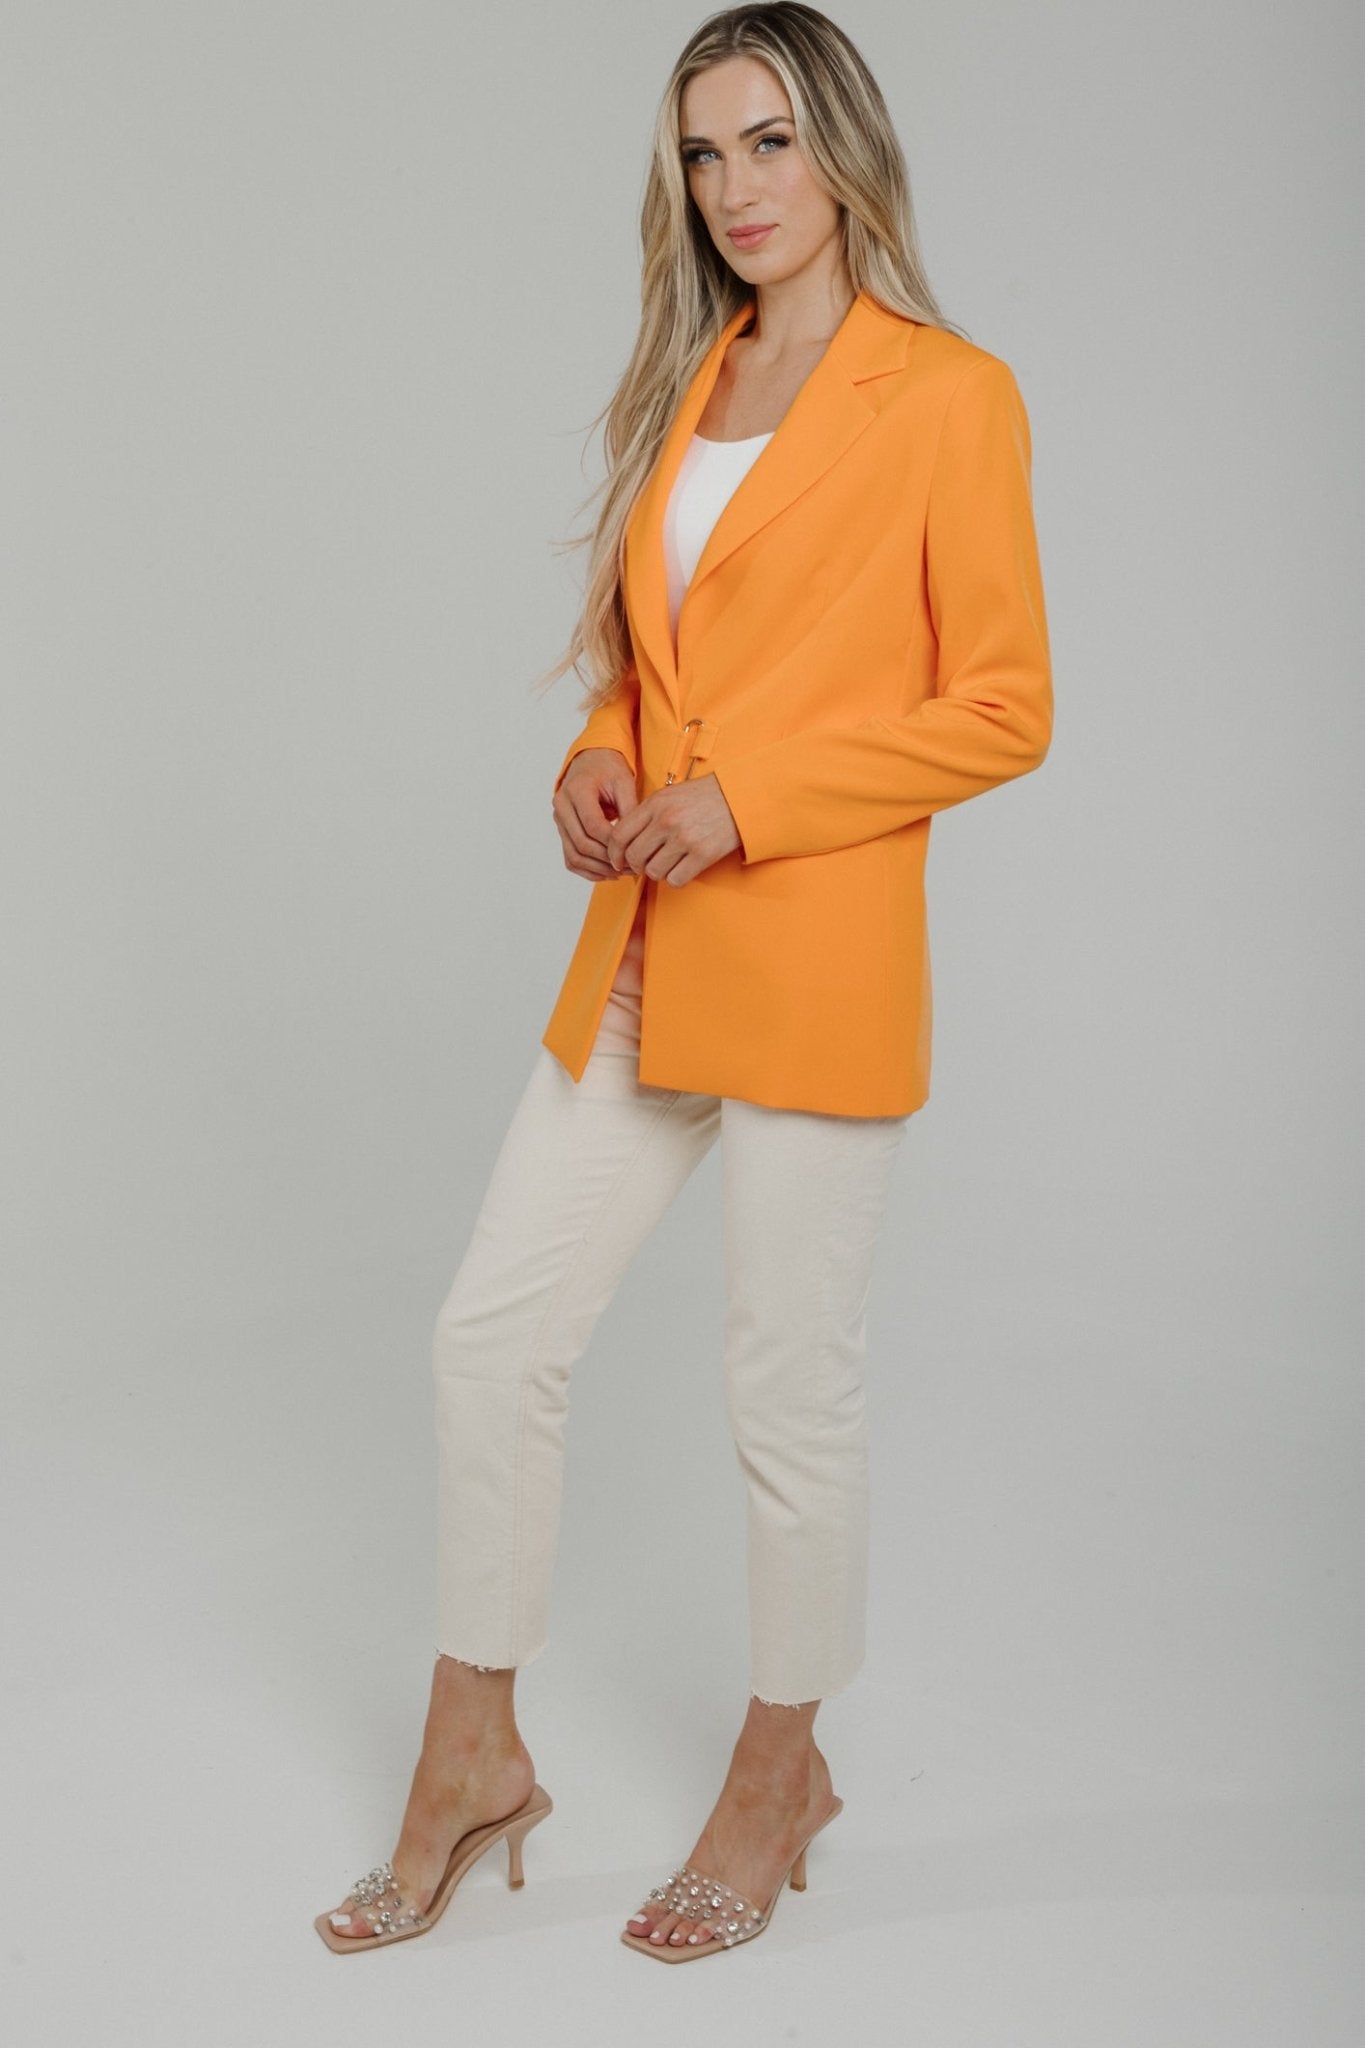 Alana Buckle Blazer In Orange - The Walk in Wardrobe